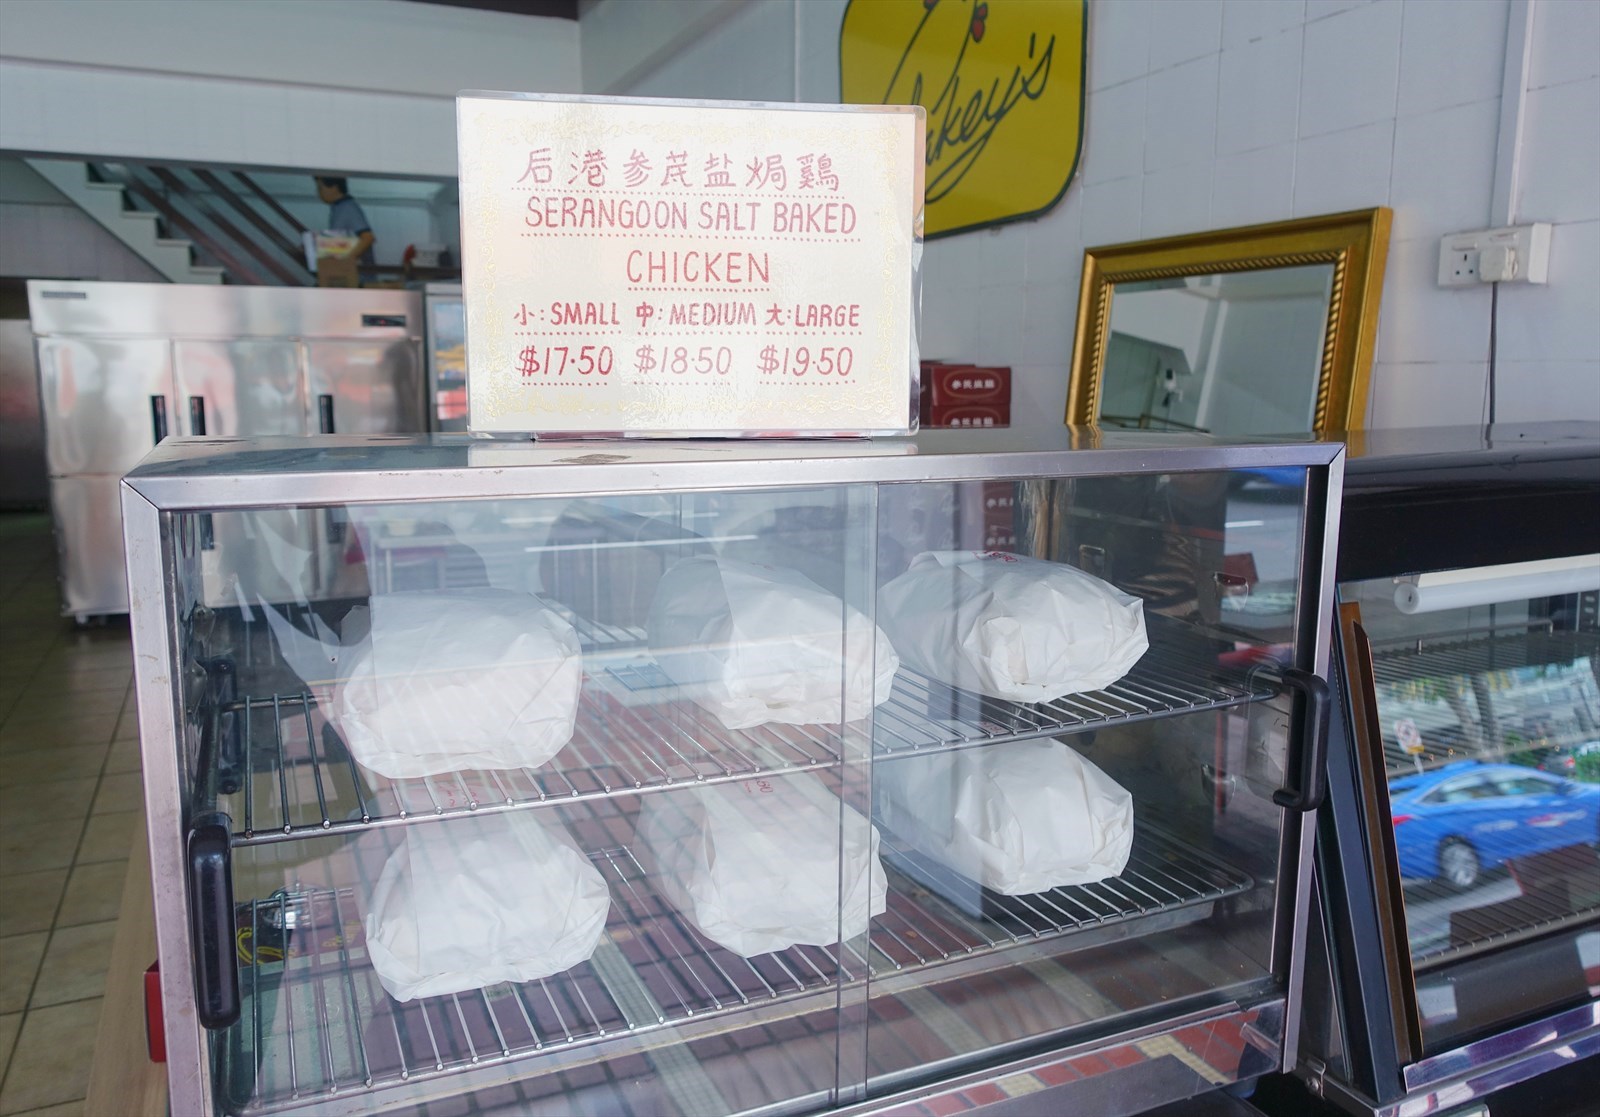 Chakey's Serangoon Salt Baked Chicken prices